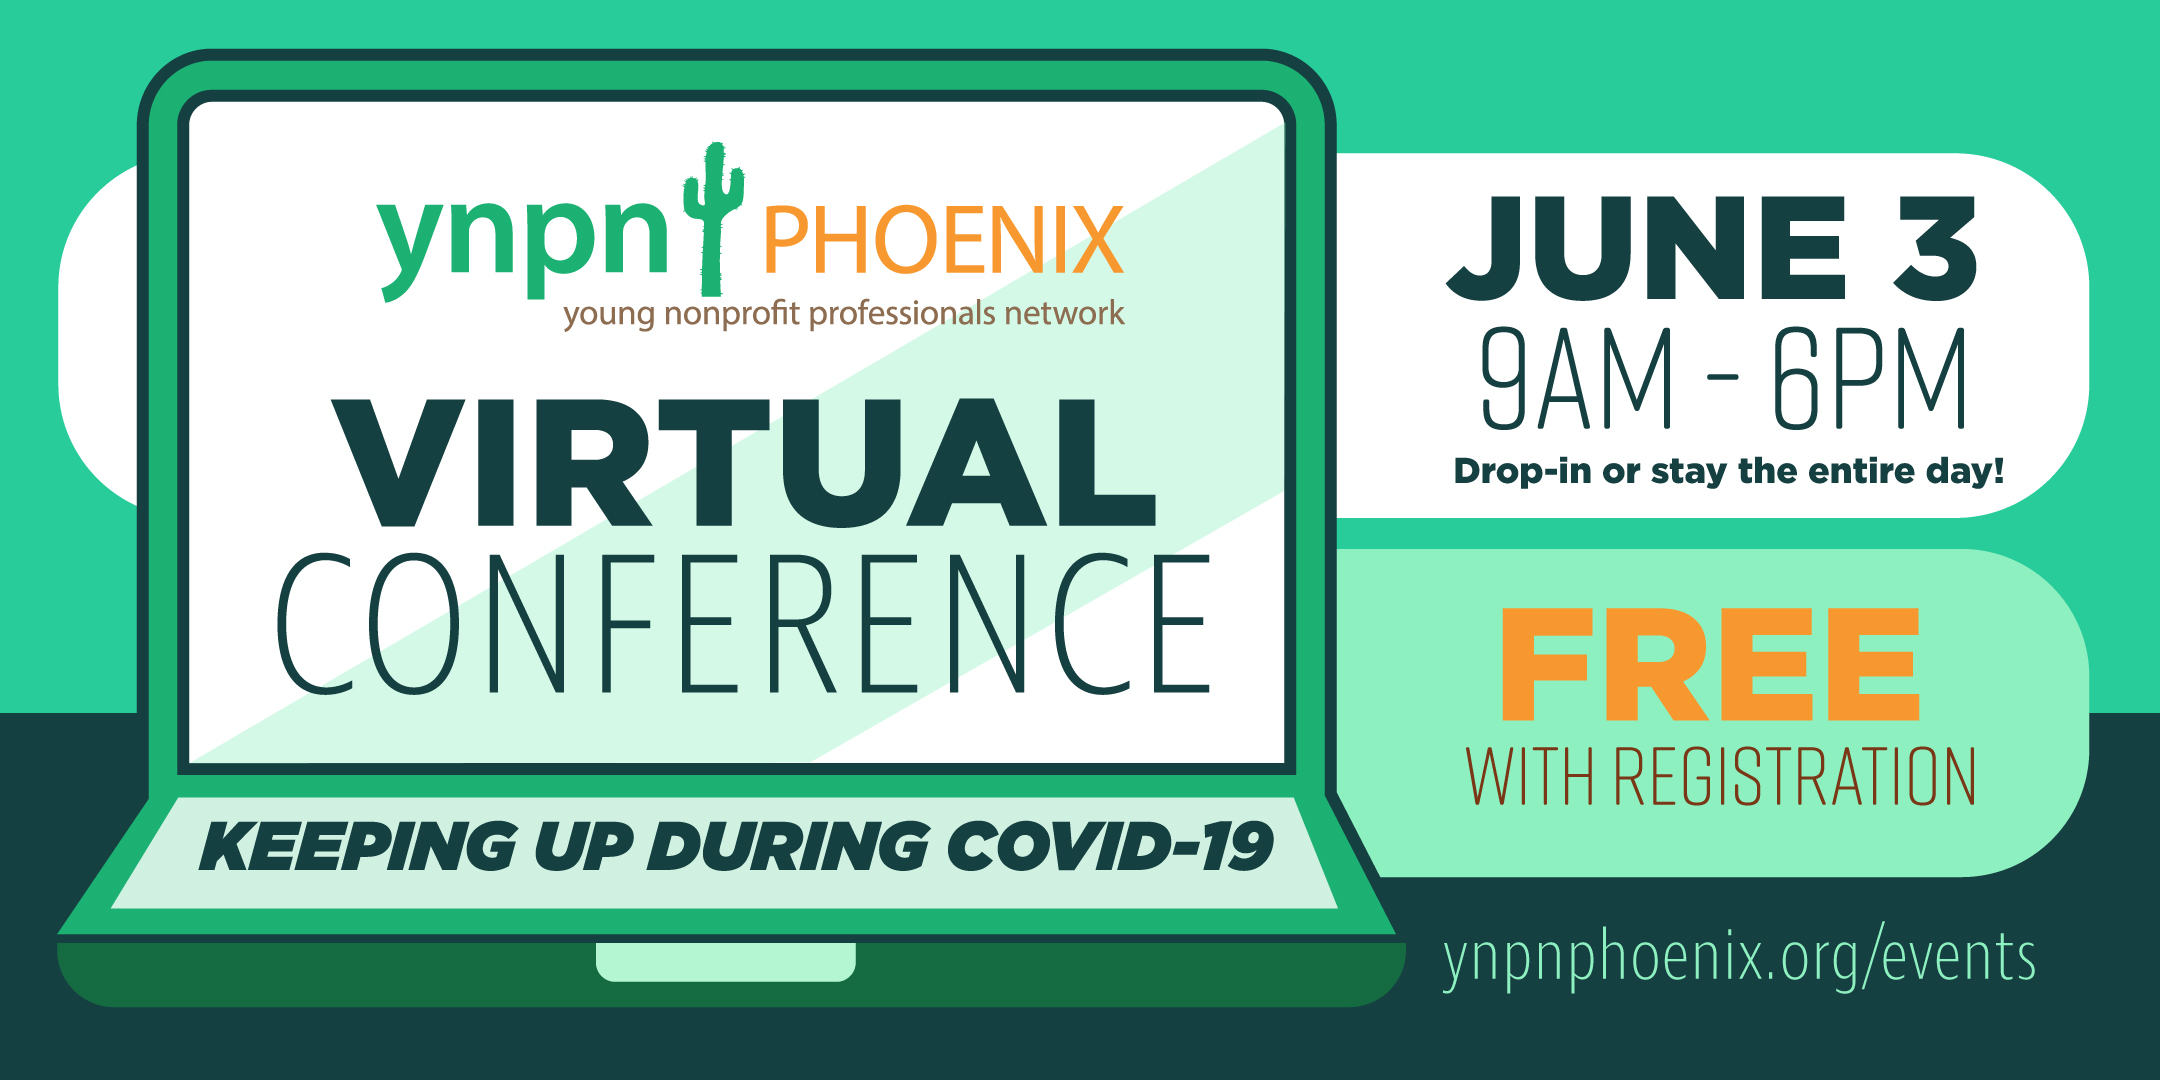 YNPN Phoenix Virtual Conference